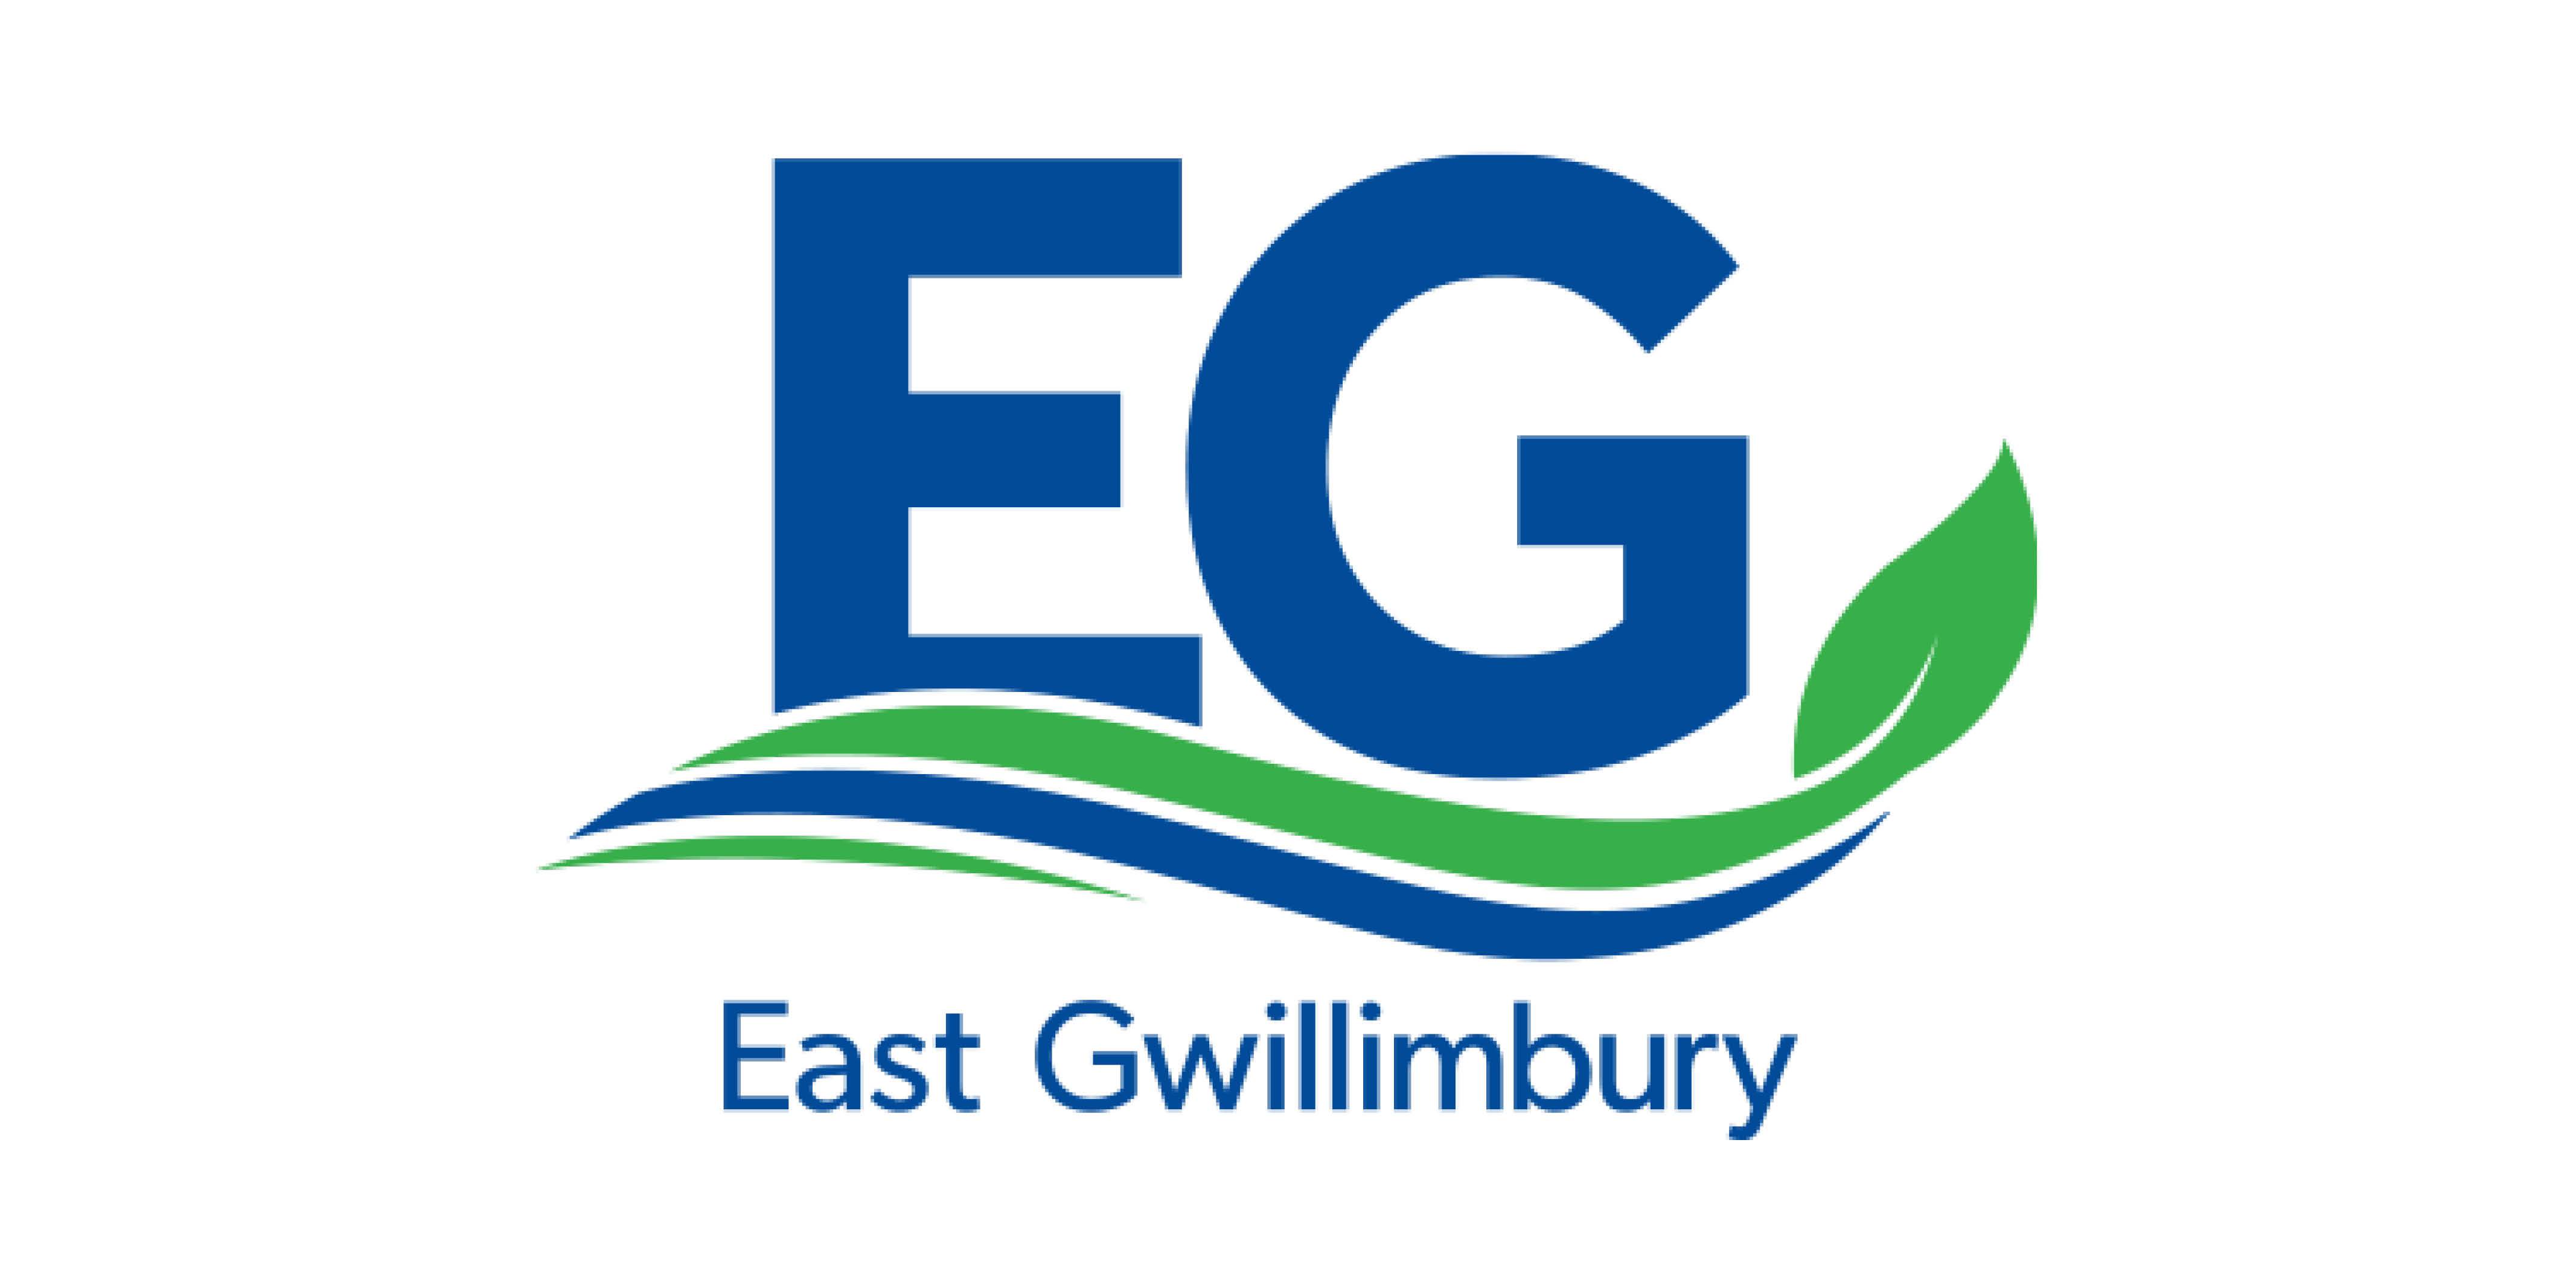 Town of East Gwillimbury logo